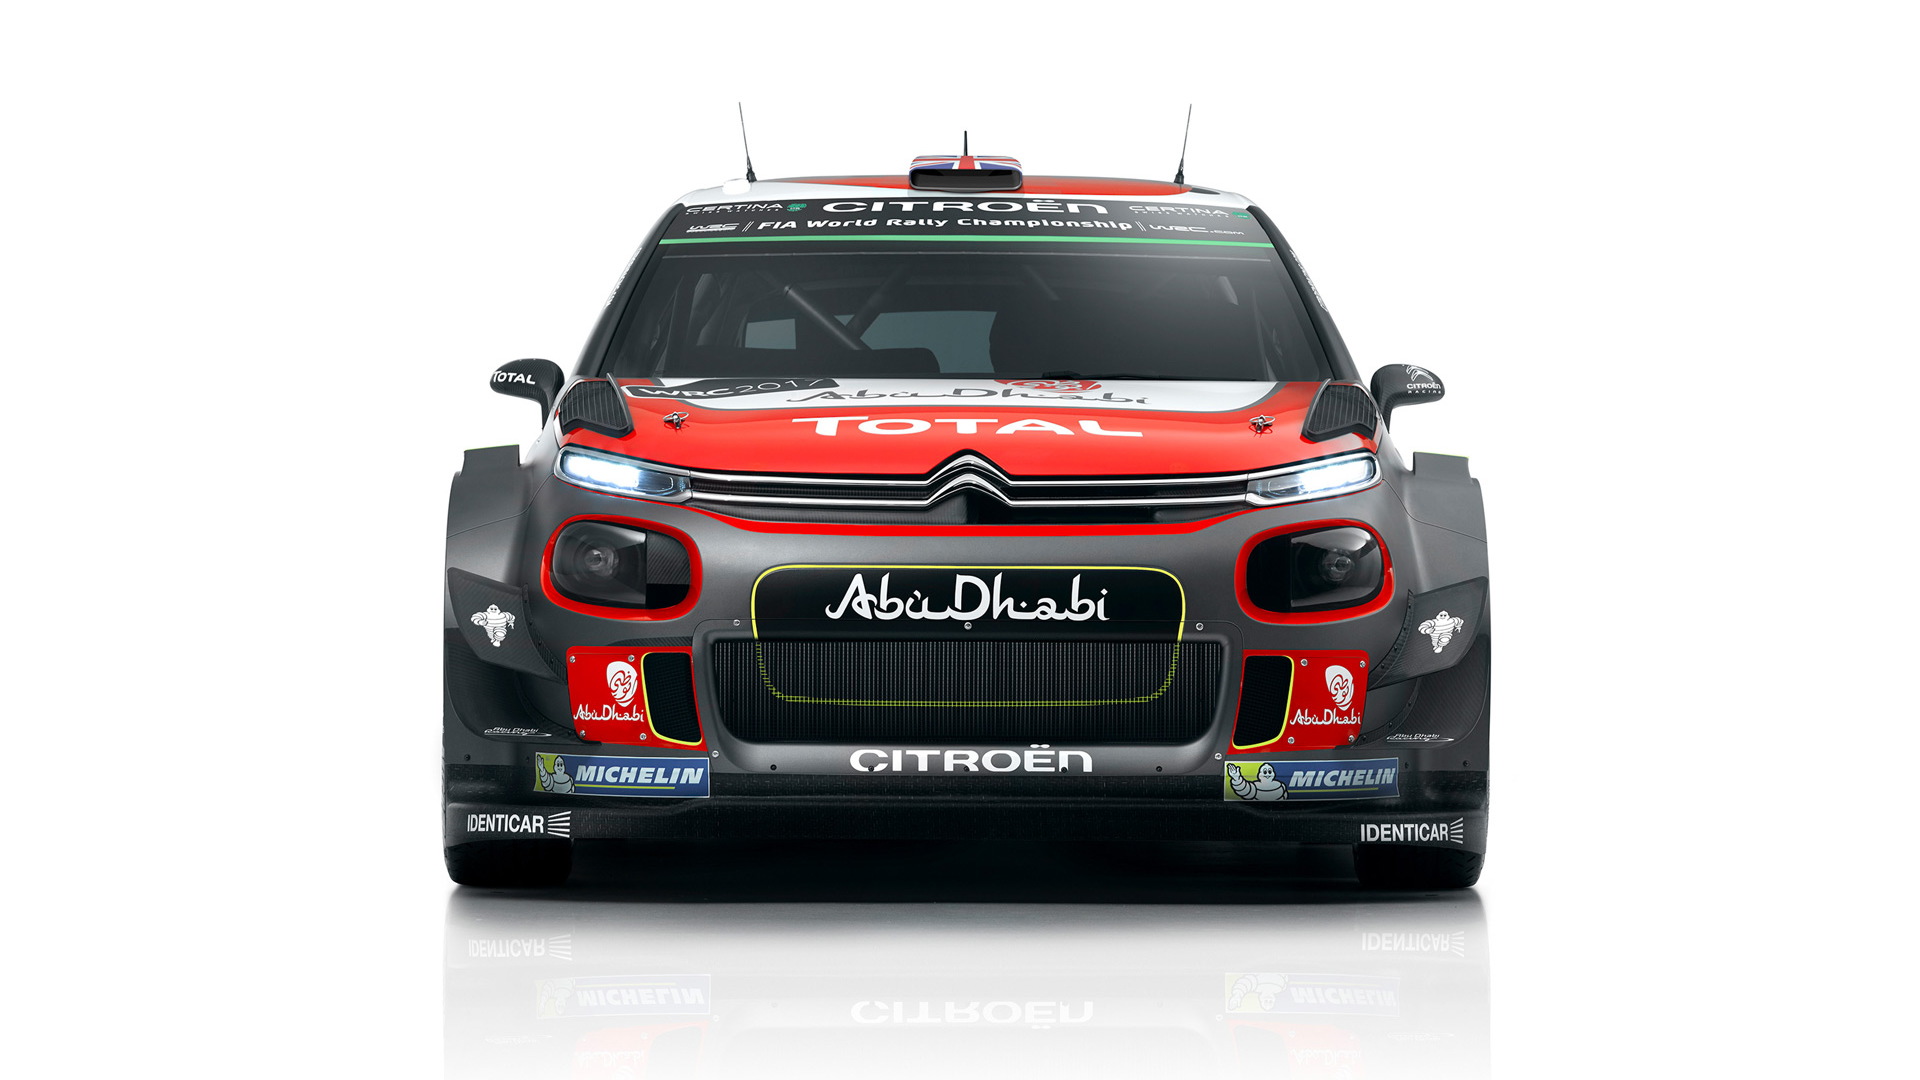 2017 Citroën C3 WRC rally car